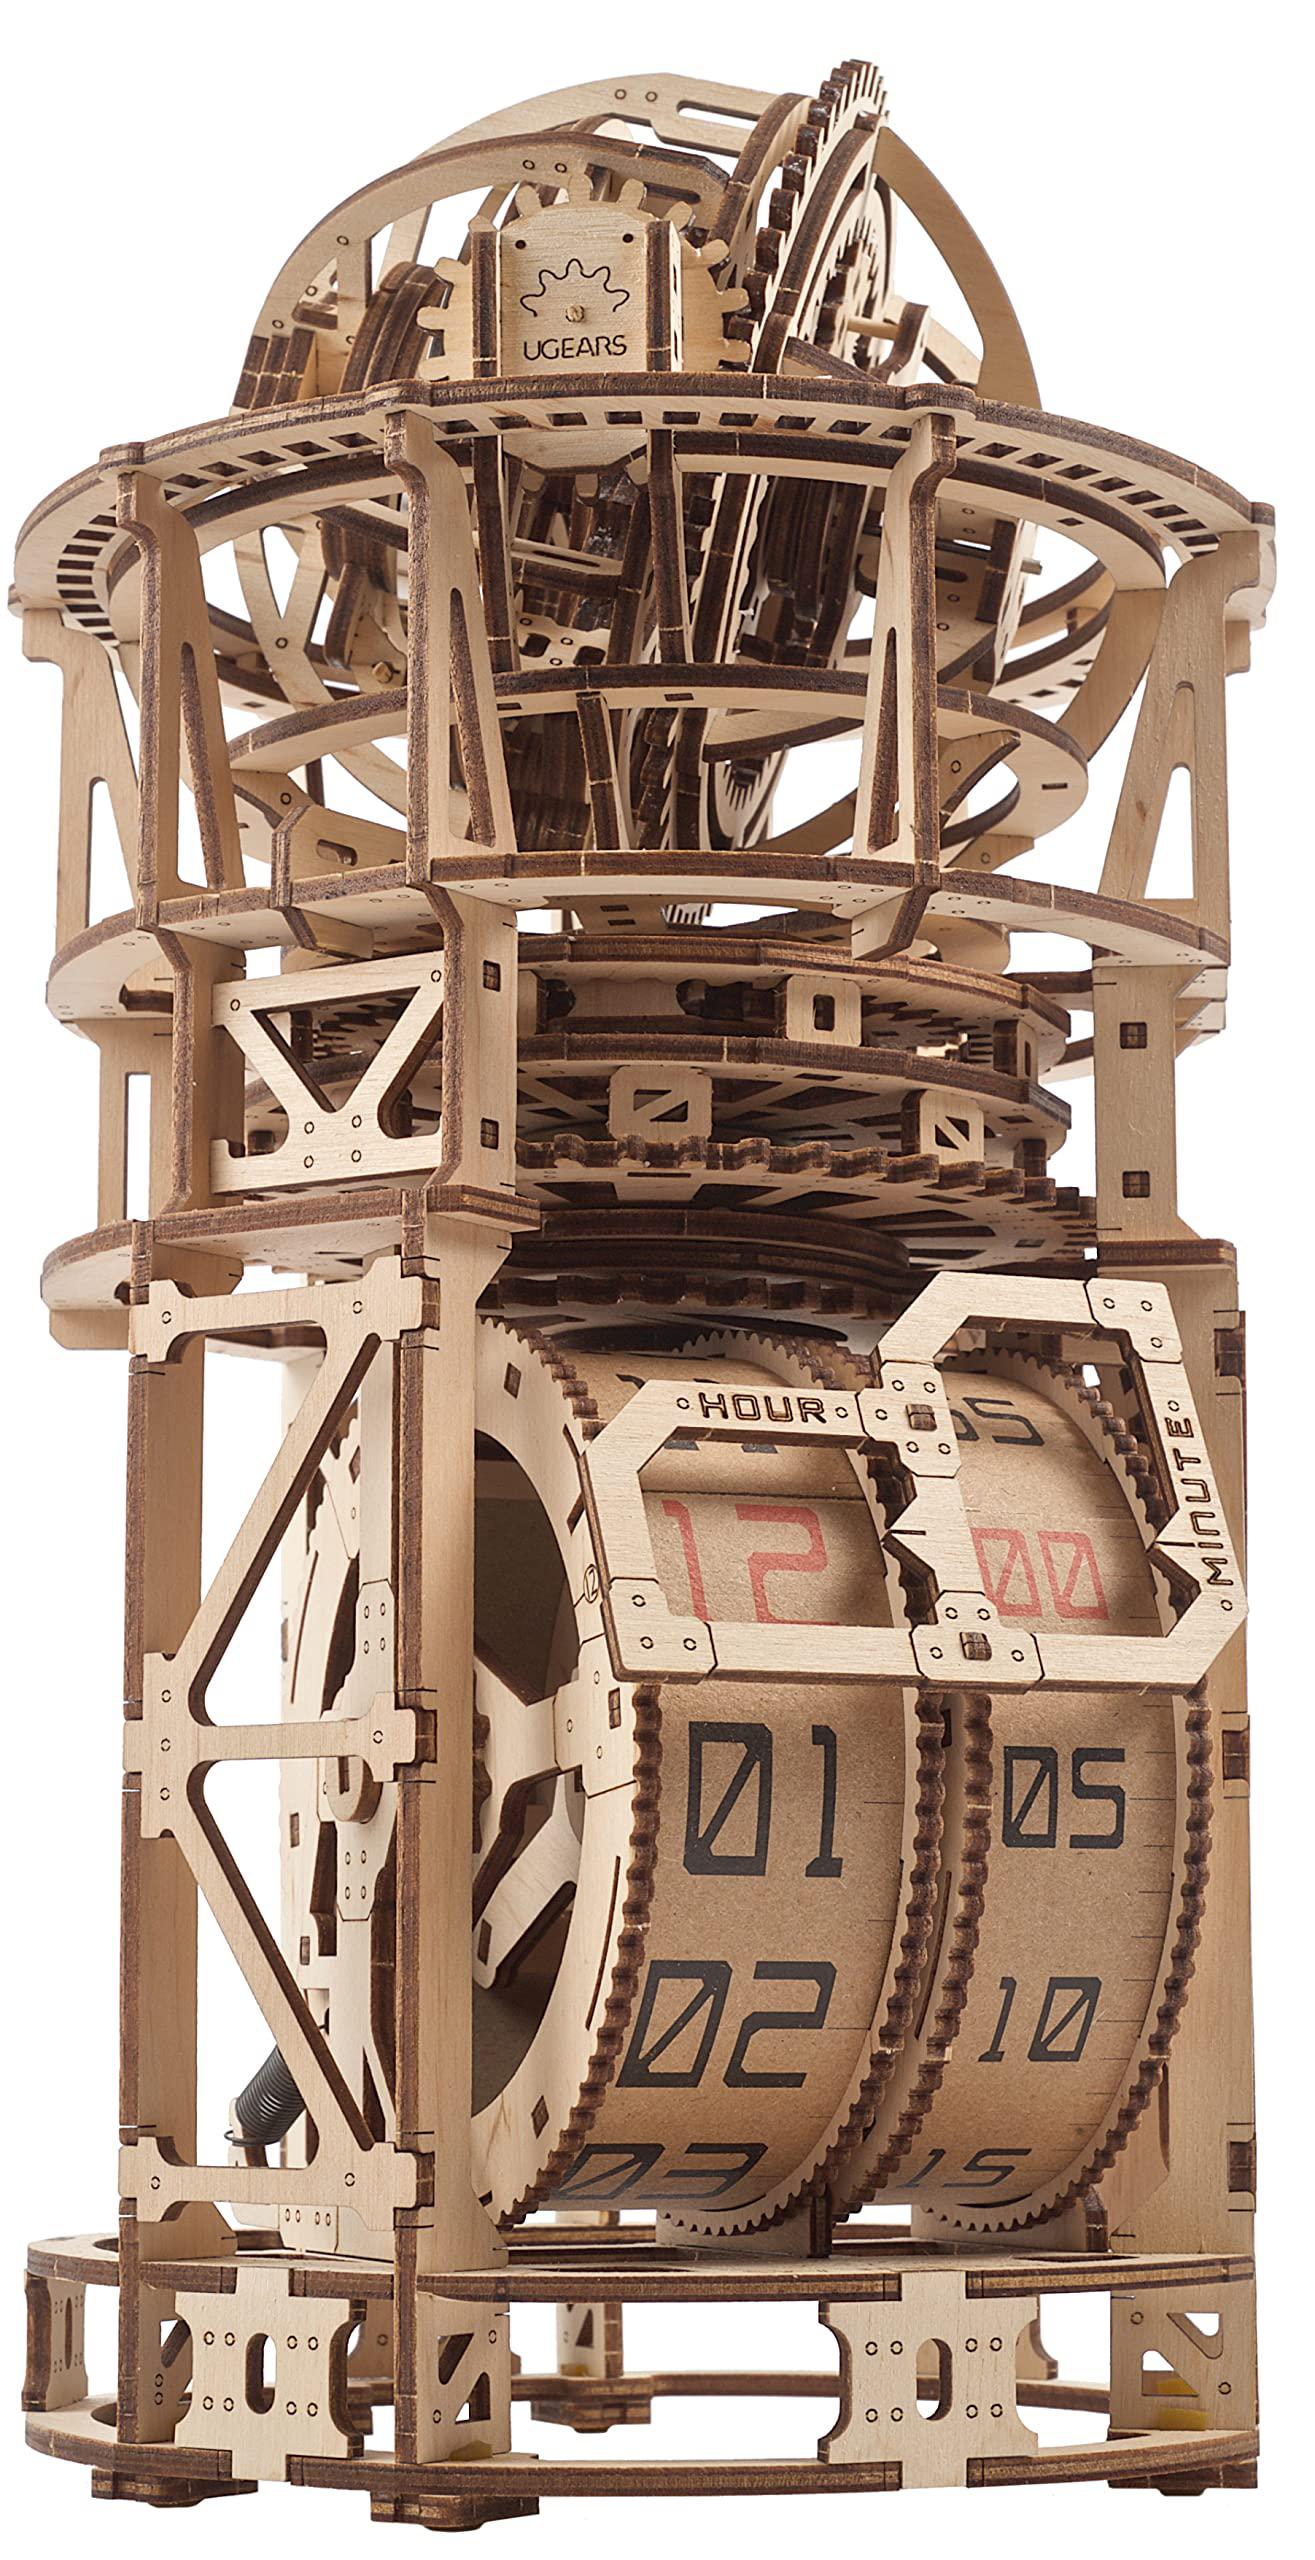 ugears tourbillon table clock kit - sky watcher 3d wooden puzzles mechanical clock kit idea deskwood clock kits to build - 3d